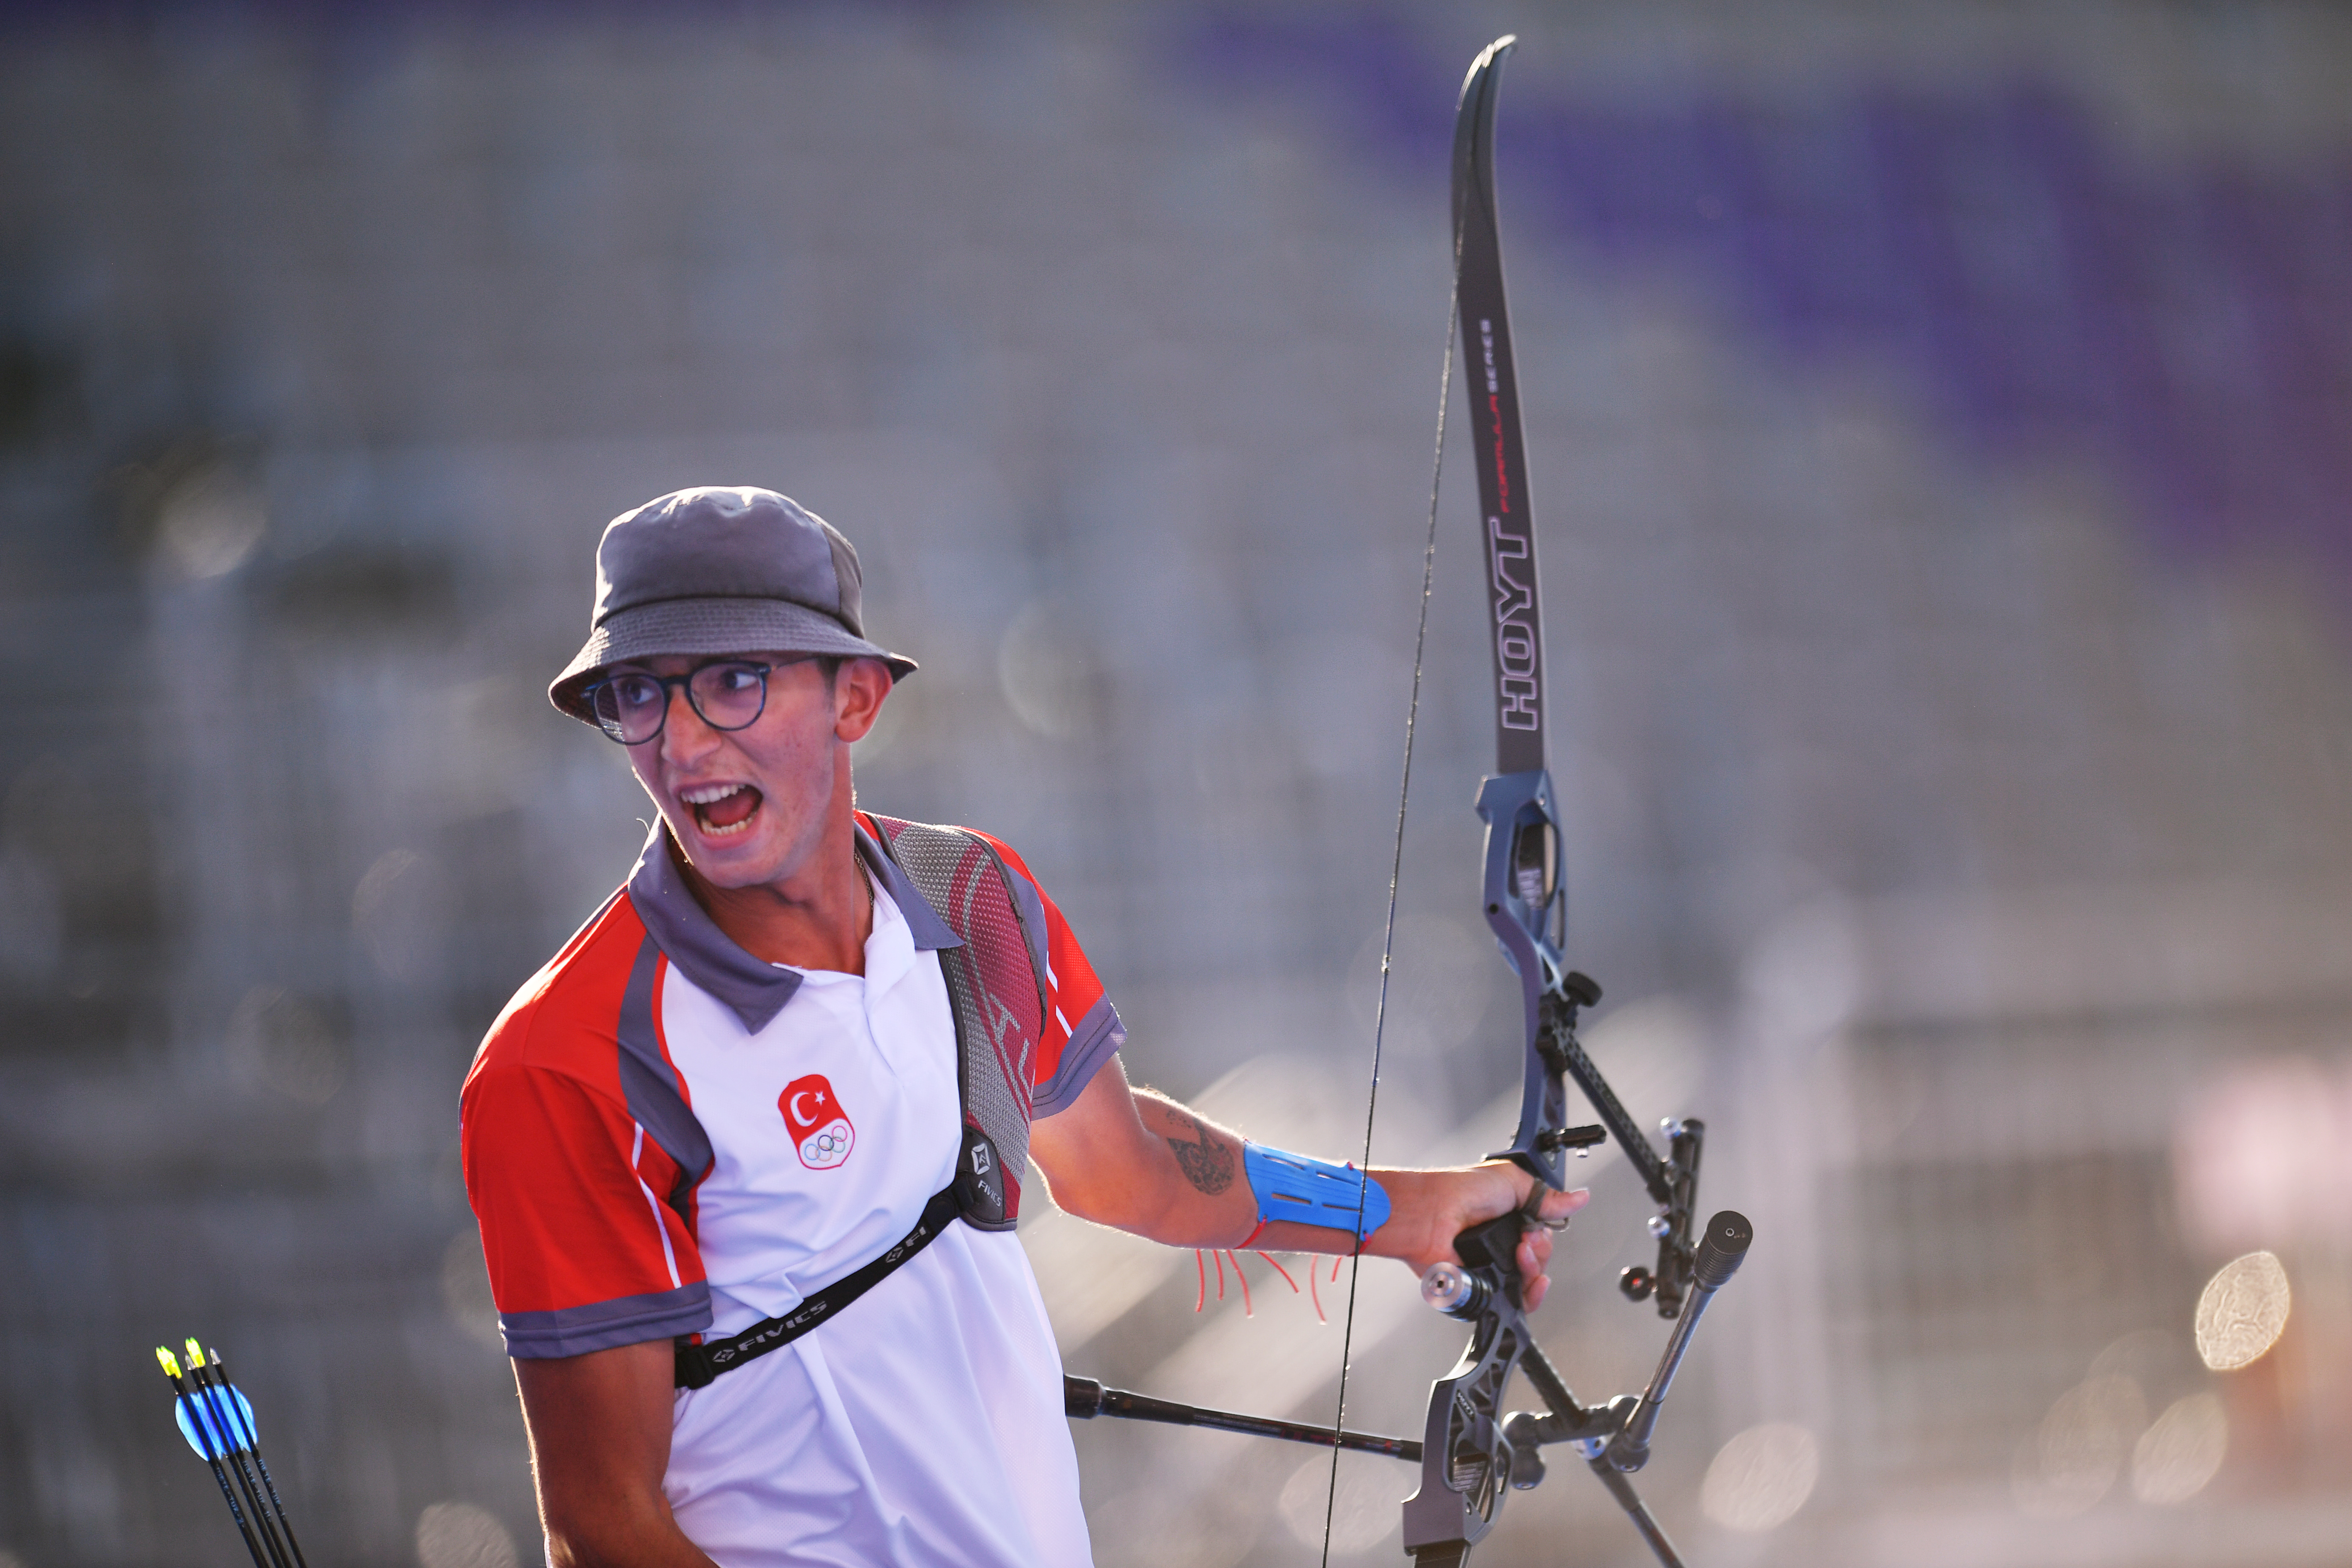 Archery Turkey S Gazoz Wins Gold In Men S Individual Reuters